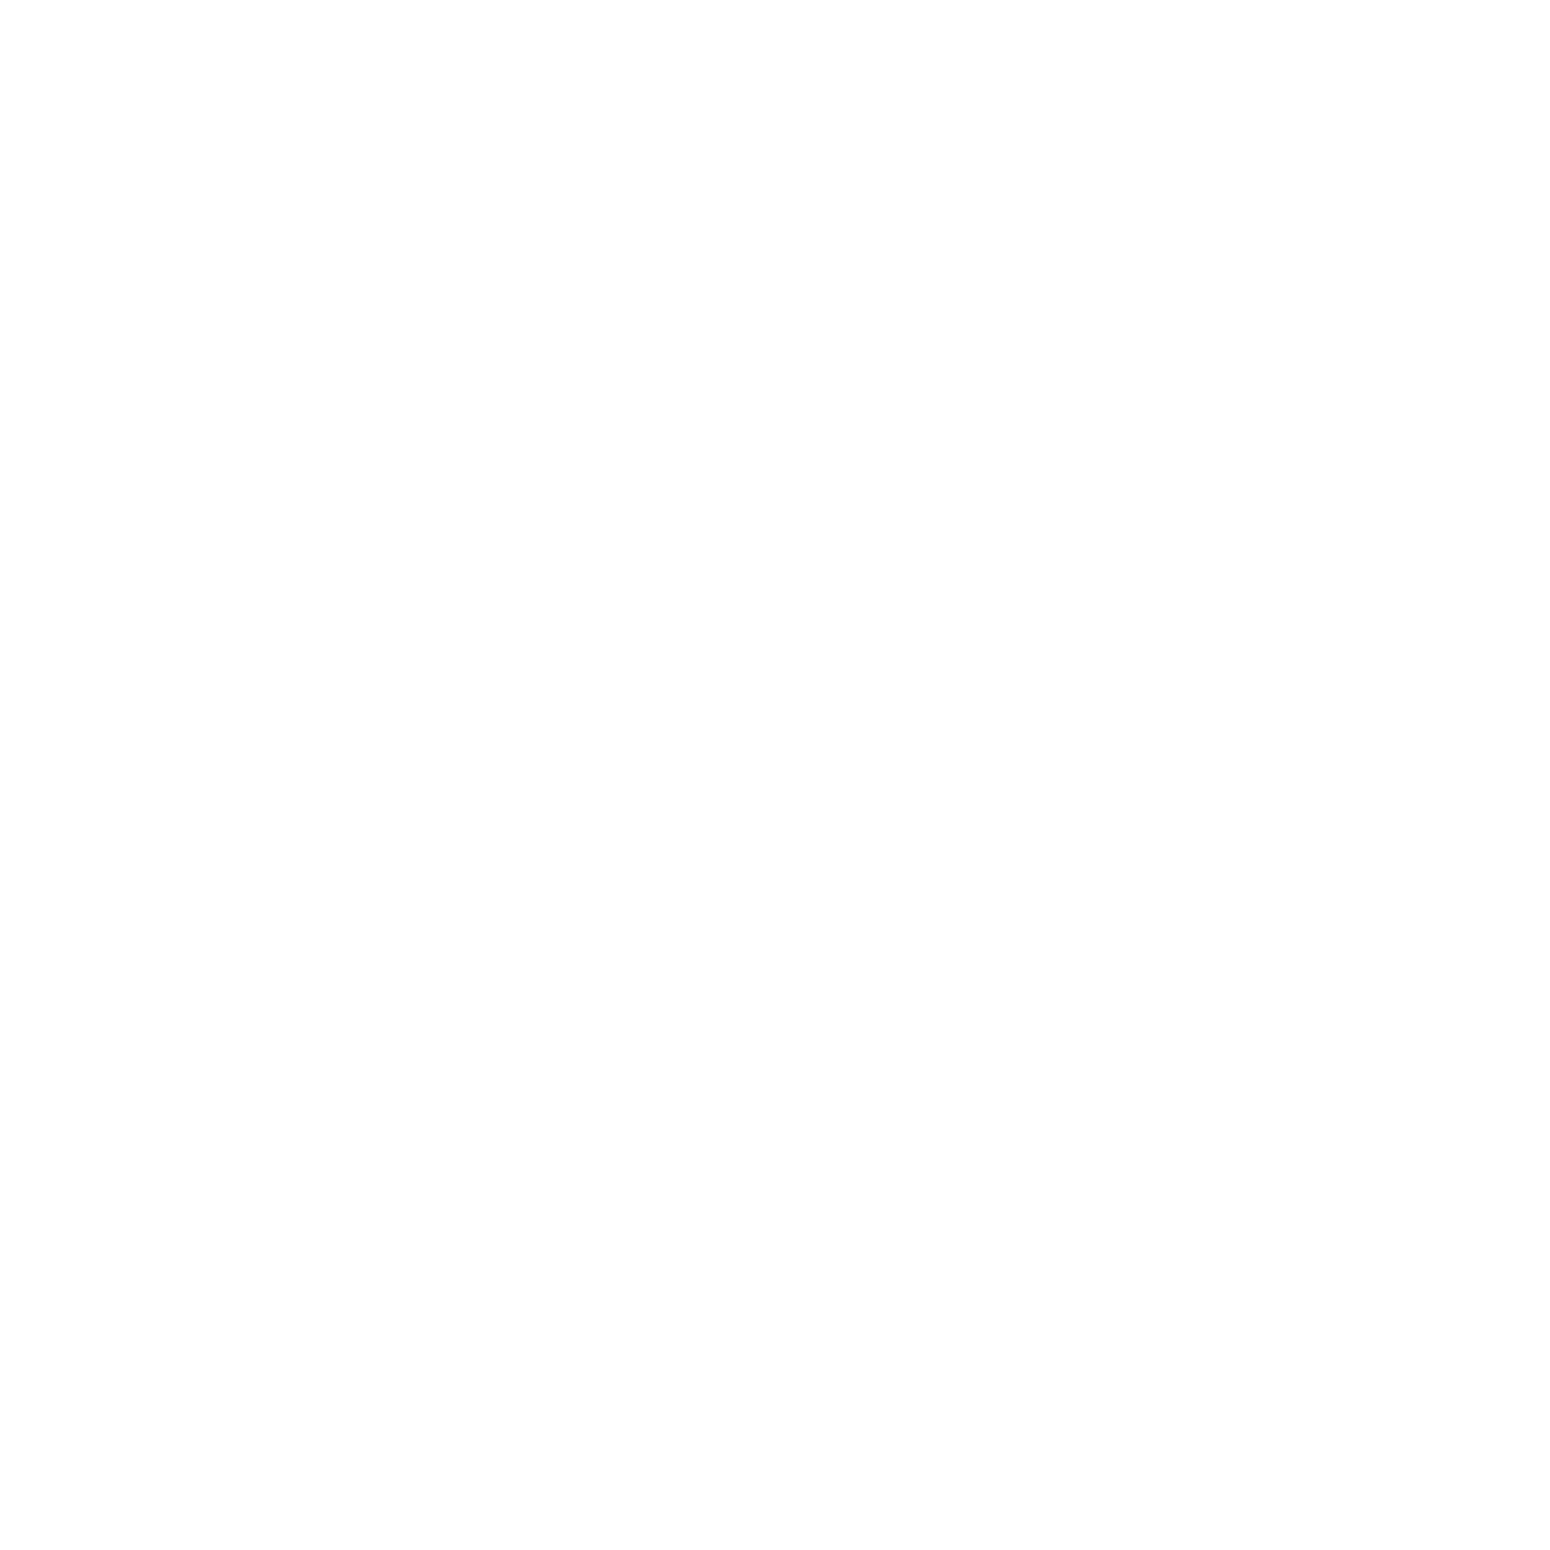 Volvo Logo History: The Volvo Symbol Meaning